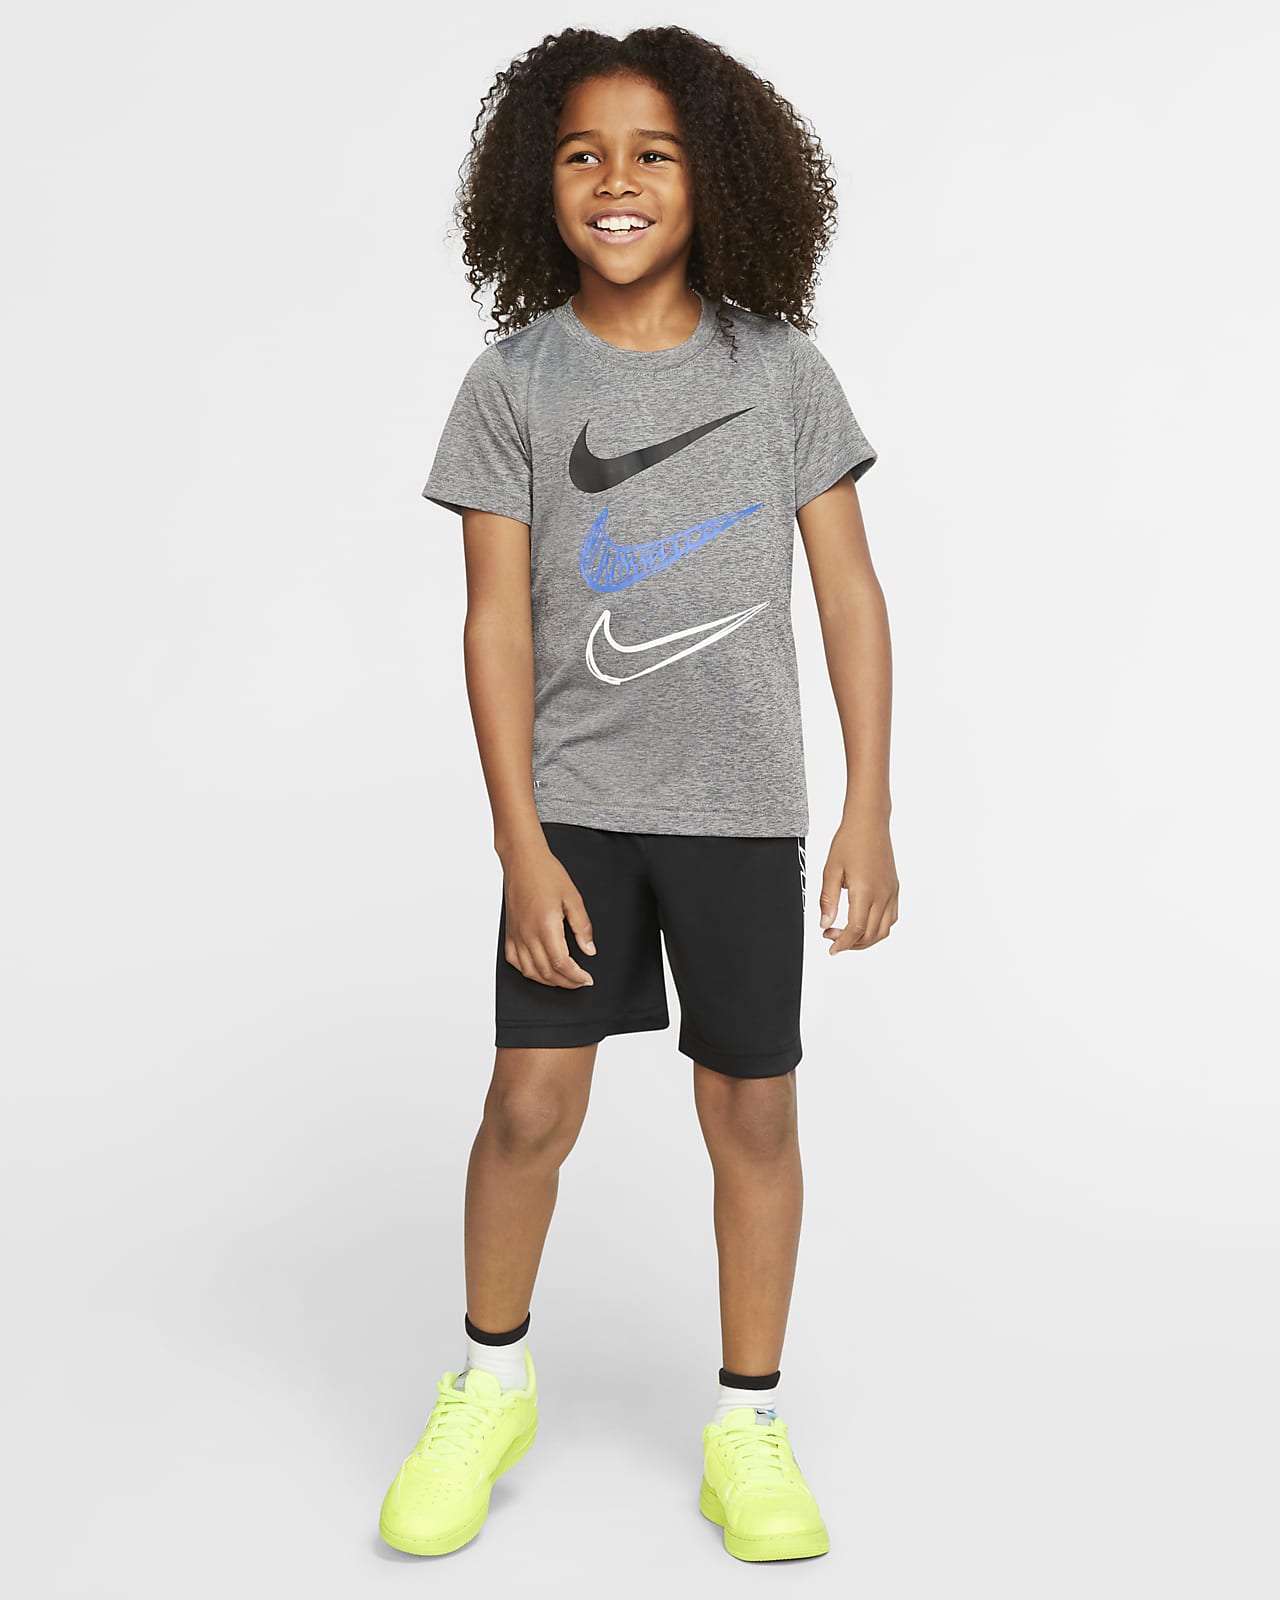 Kit Nike Sportswear for Child. T-shirt + Shorts